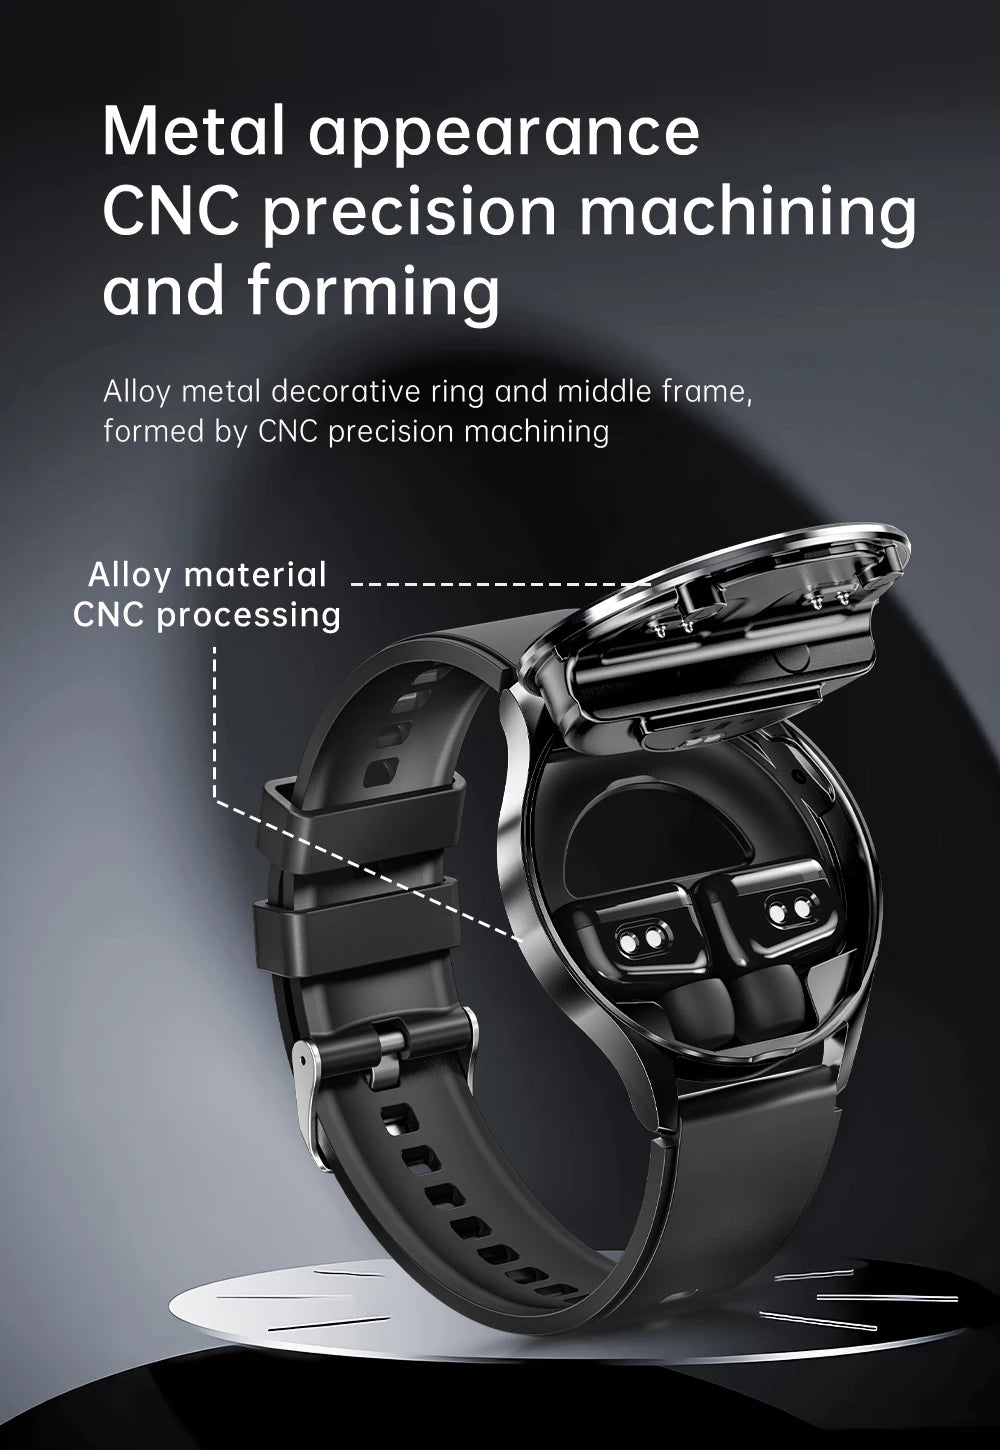 Bluetooth call smart watch Alipay offline payment multi sport mode heart rate health monitoring smart watch